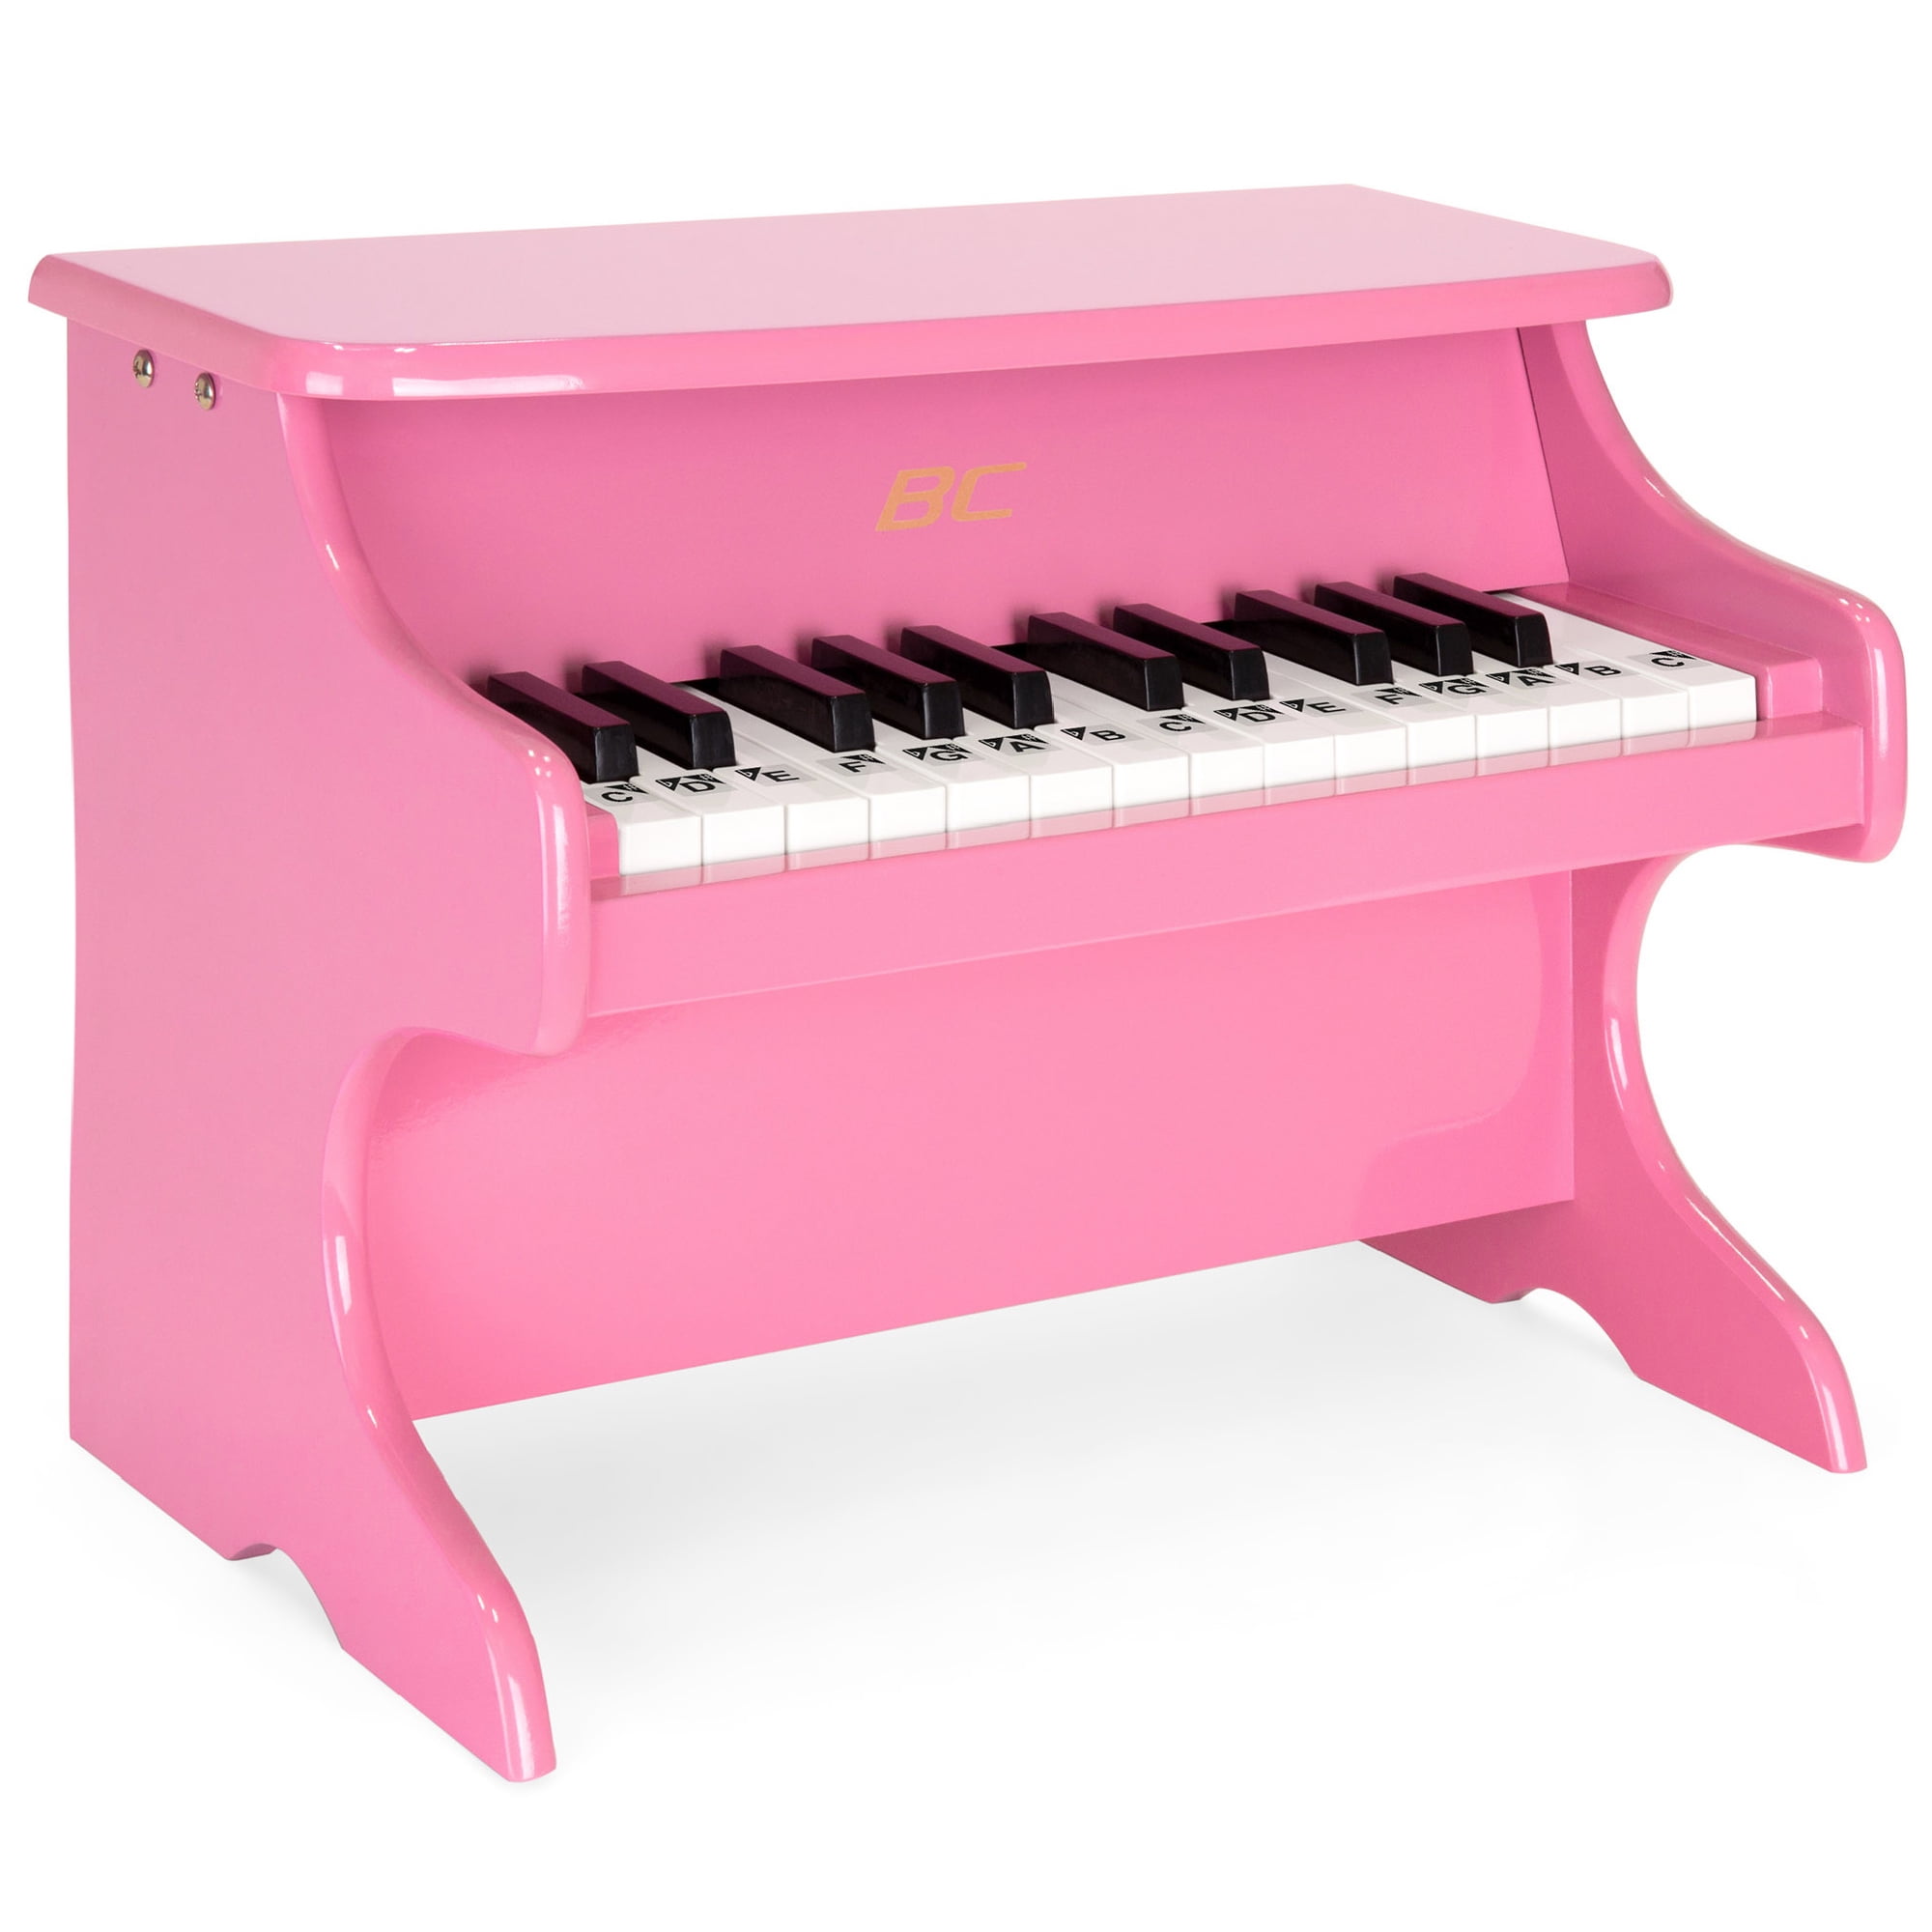 25 Key Kids Children Wooden Keyboard Mini Grand Piano Stool Musical Toy Pink 